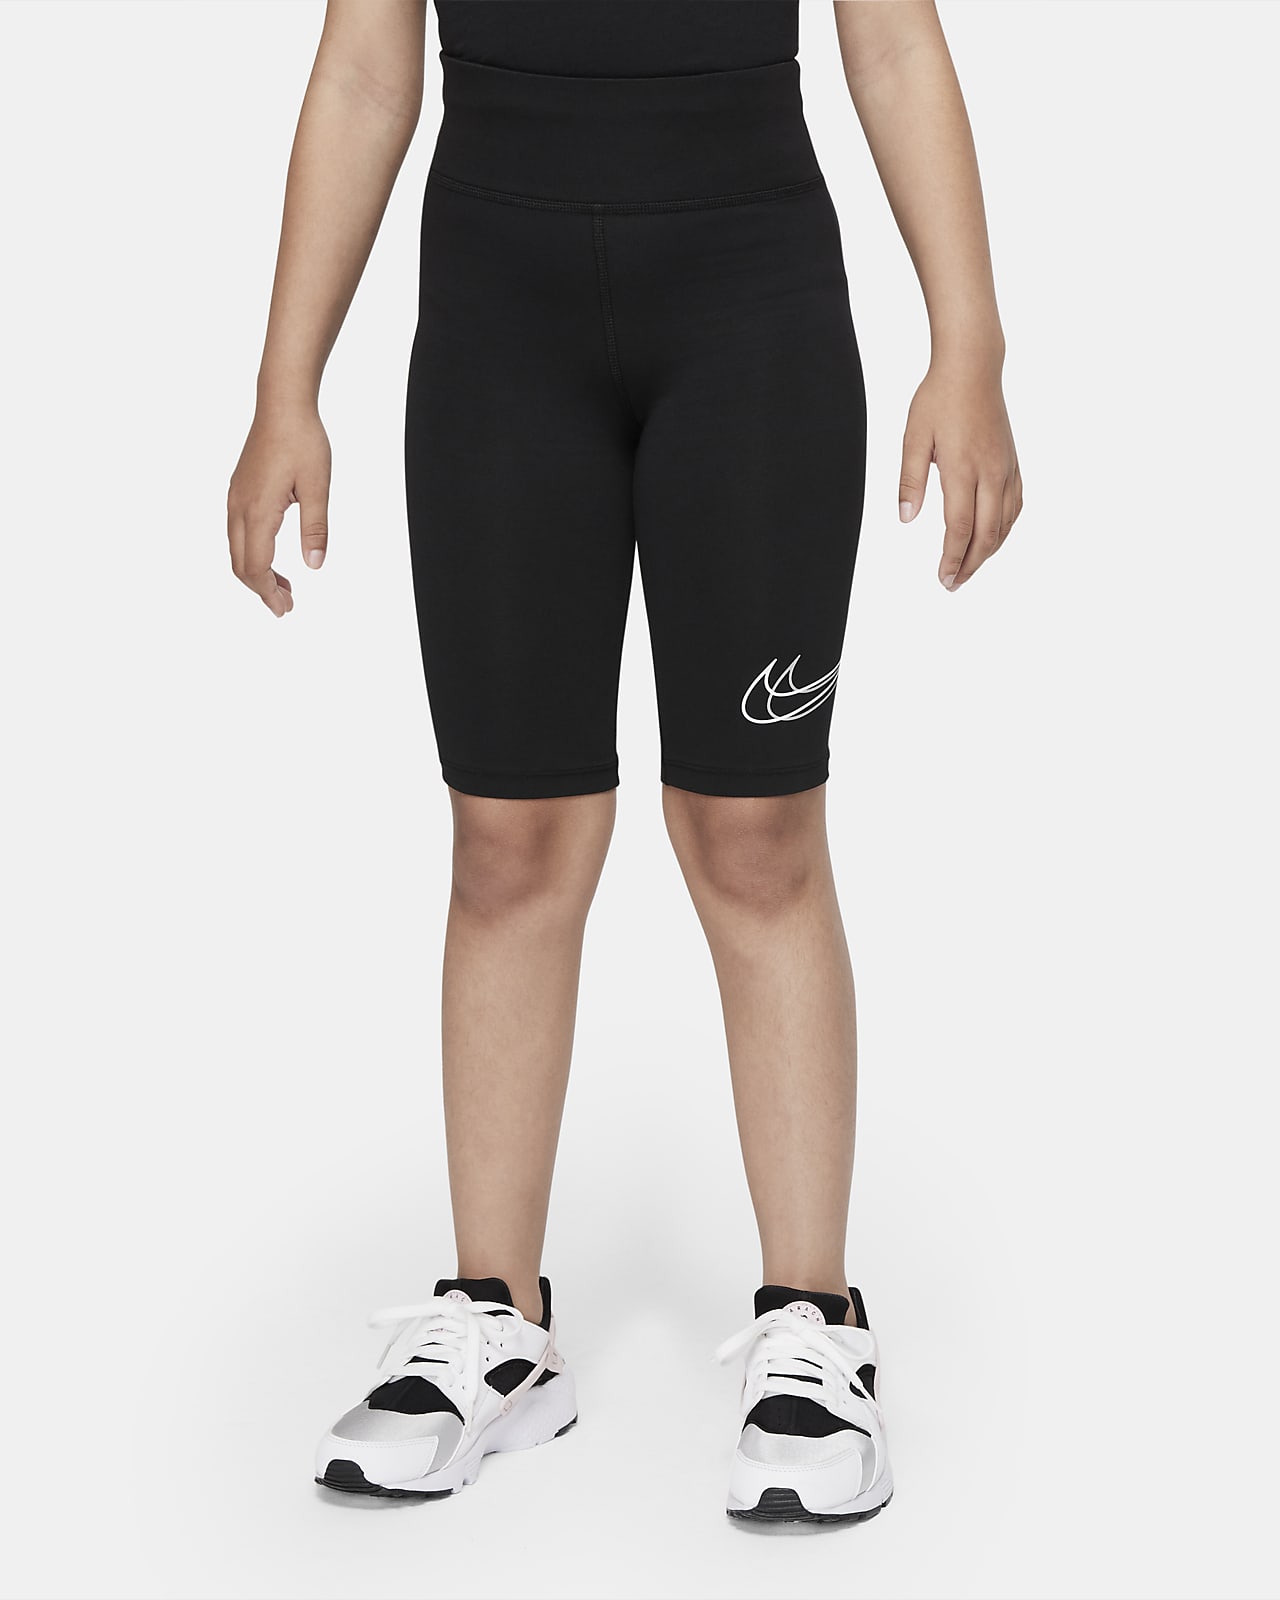 Nike Kids\' Bike Sportswear Shorts. Big (Girls\')